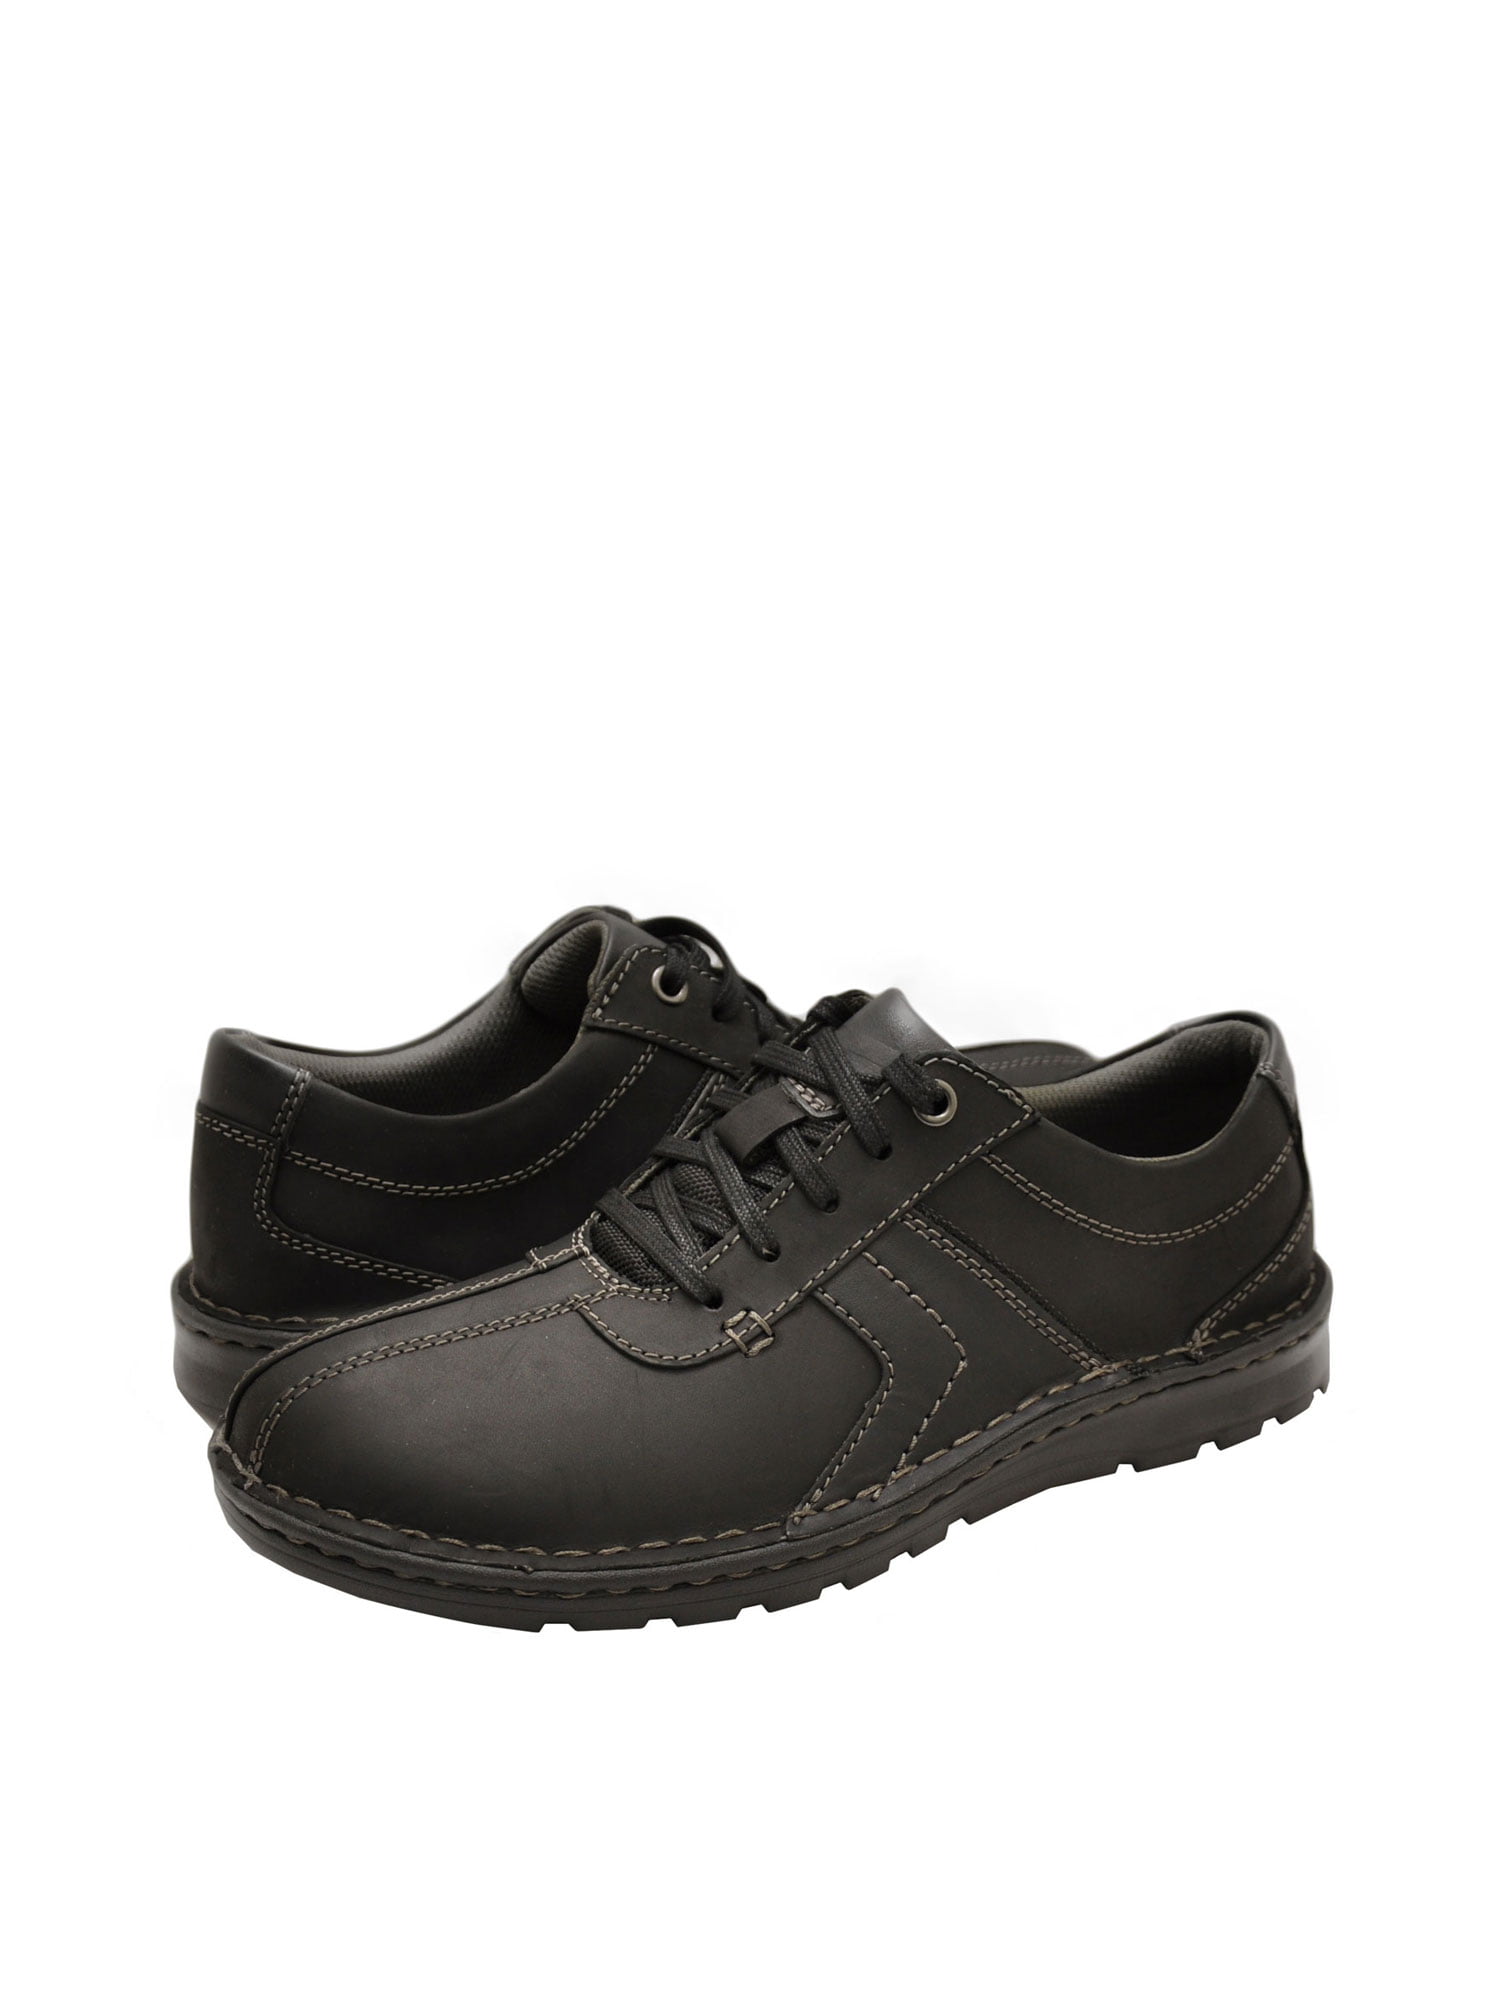 Men's Clarks Collection Vanek Walk Oxford Shoes Black 26130226 